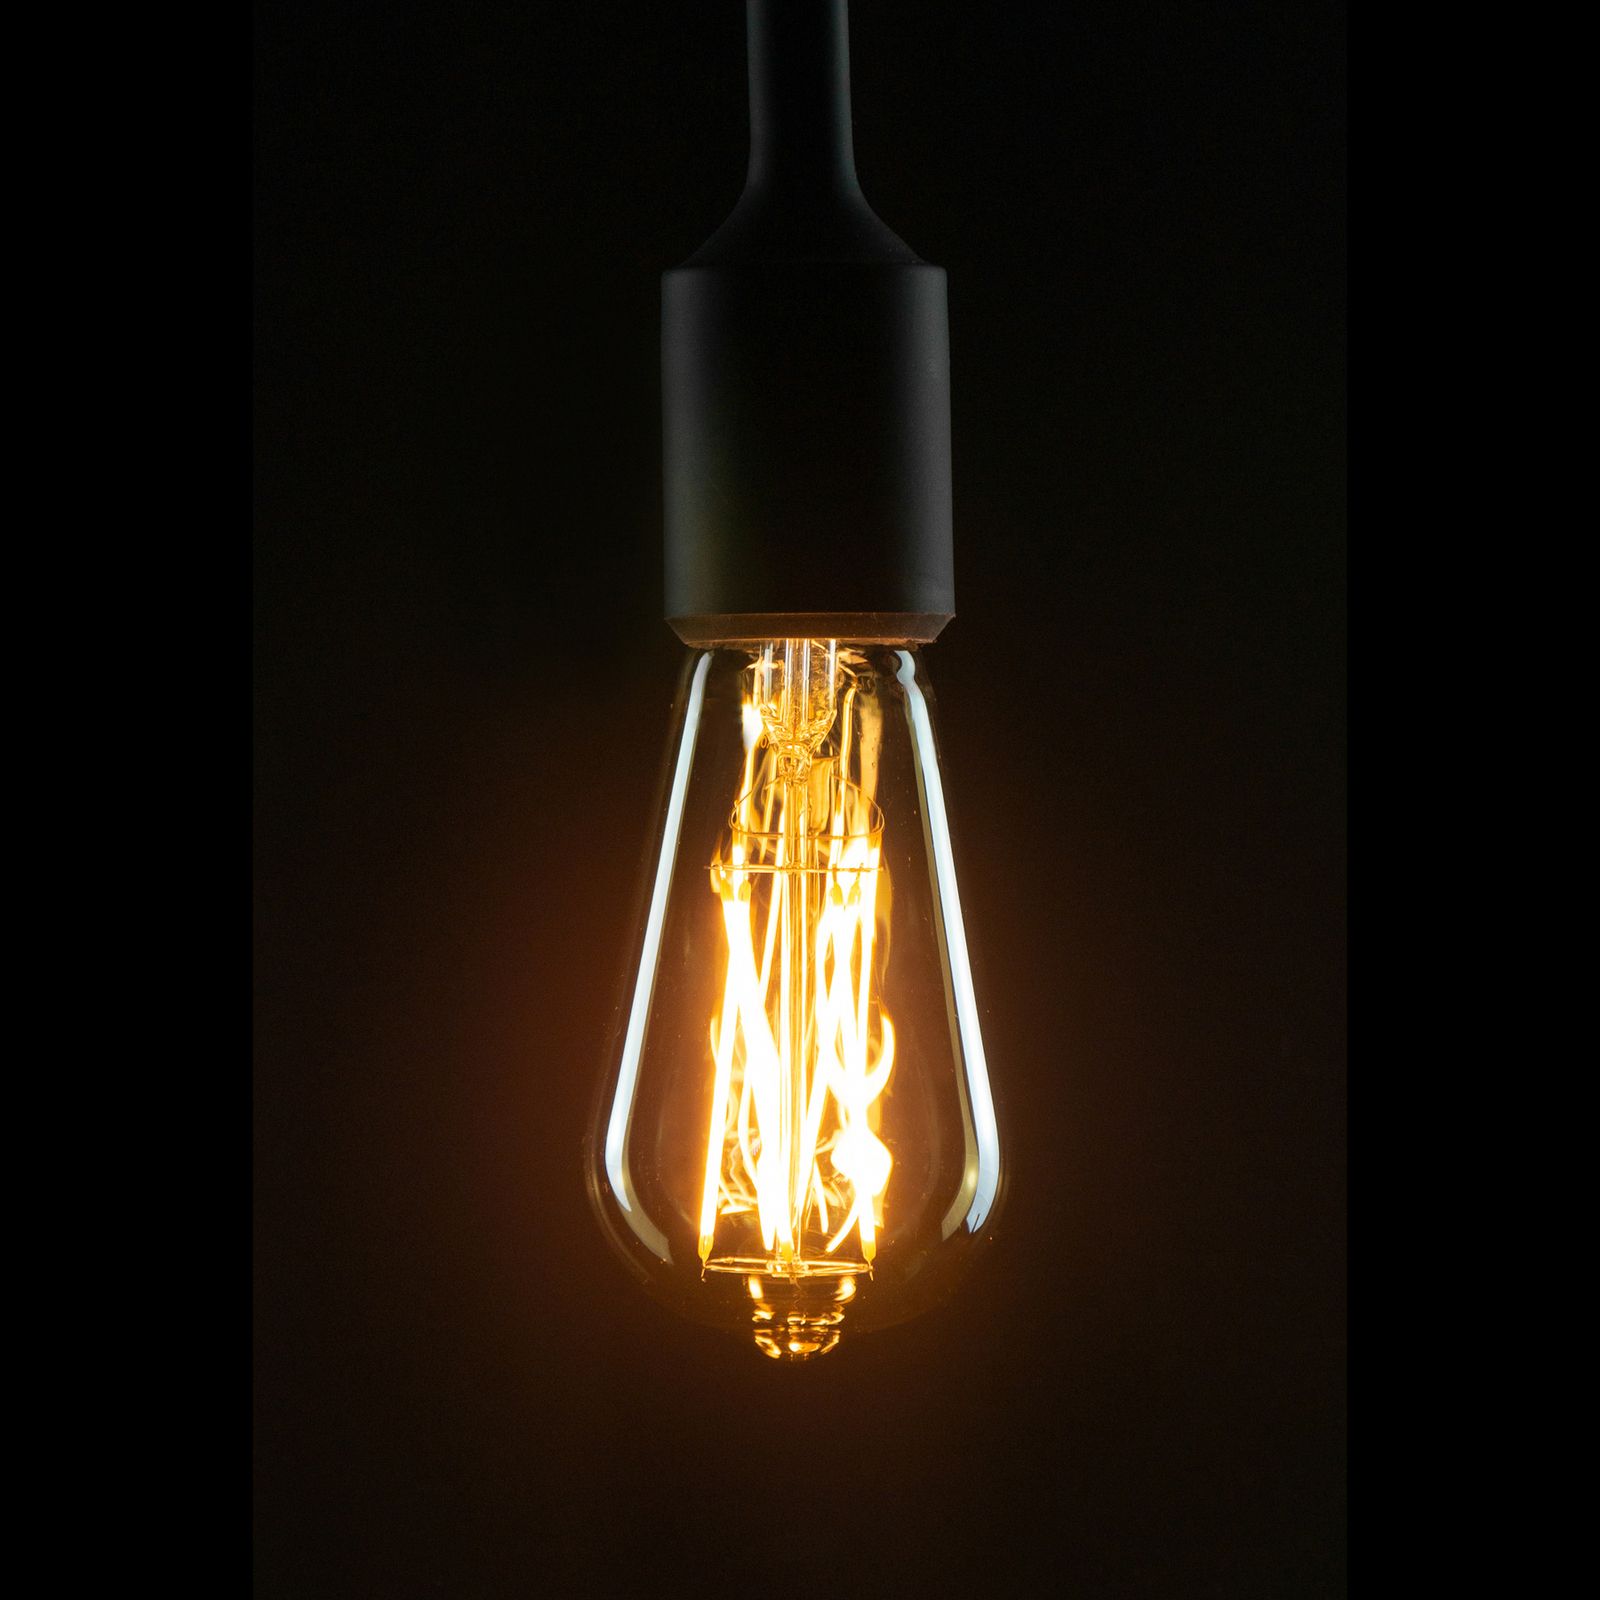 SEGULA LED-Lampe E27 ST64 5W 2.200K gold/gold dim